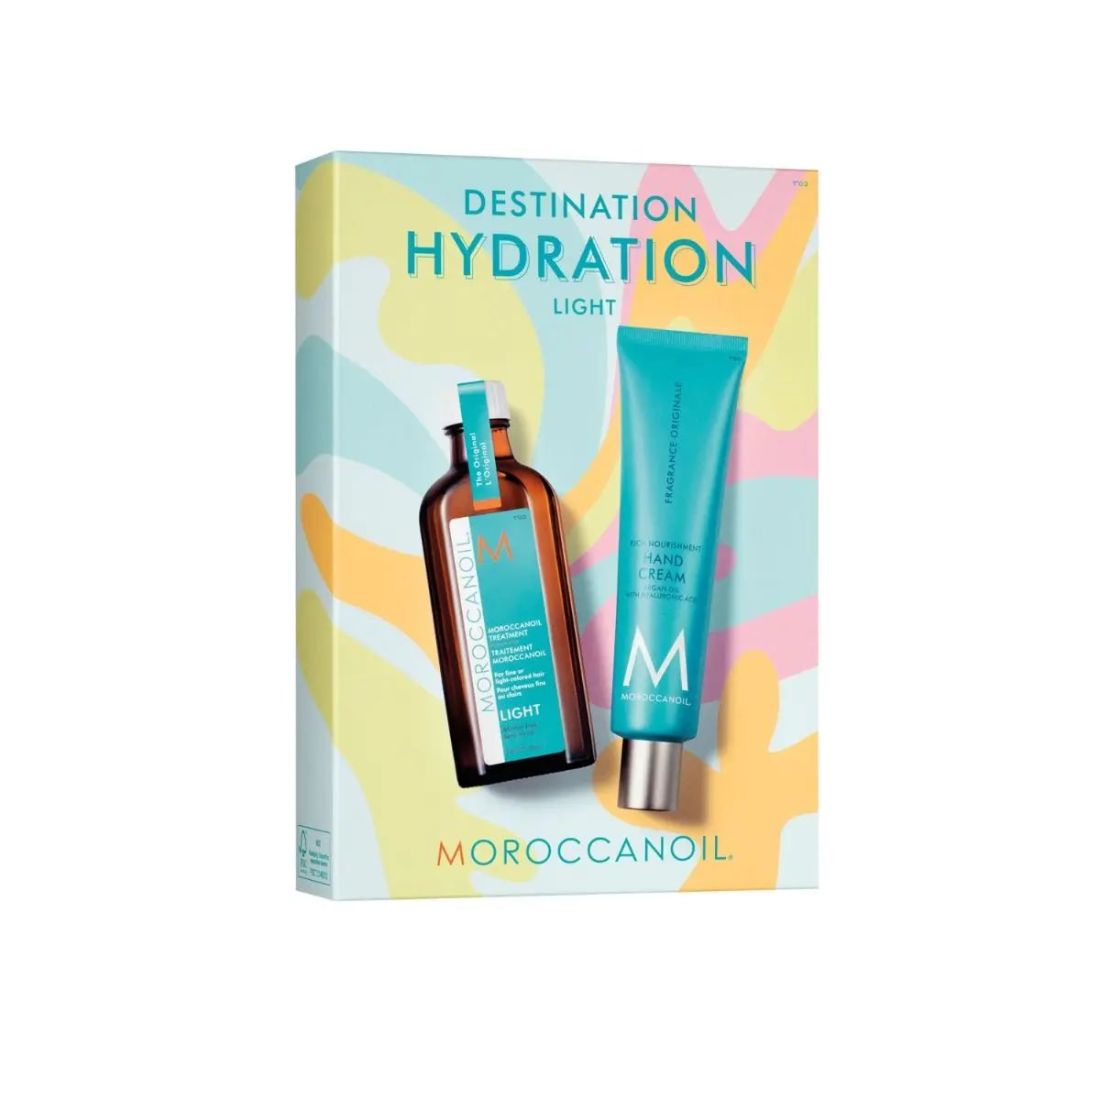 Moroccanoil Hydration Destination Light Set (Oil Treatment Light 100ml & ΔΩΡΟ Hand Cream 100ml)